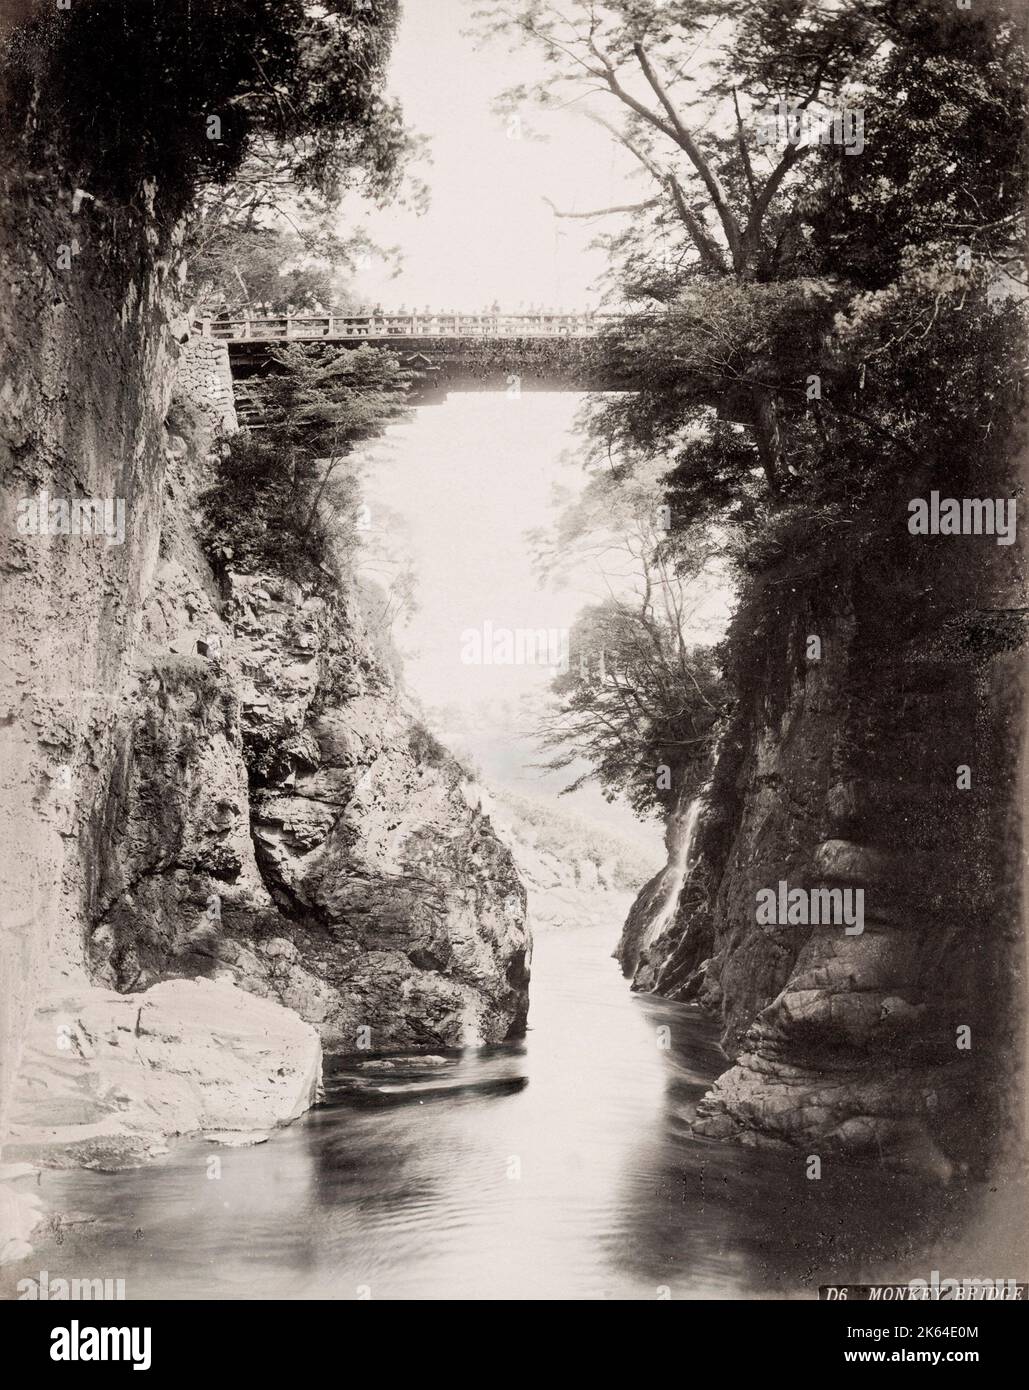 Vintage 19th century photograph: Monkey Bridge, high level wooden bridge over a gorge, Japan. Stock Photo